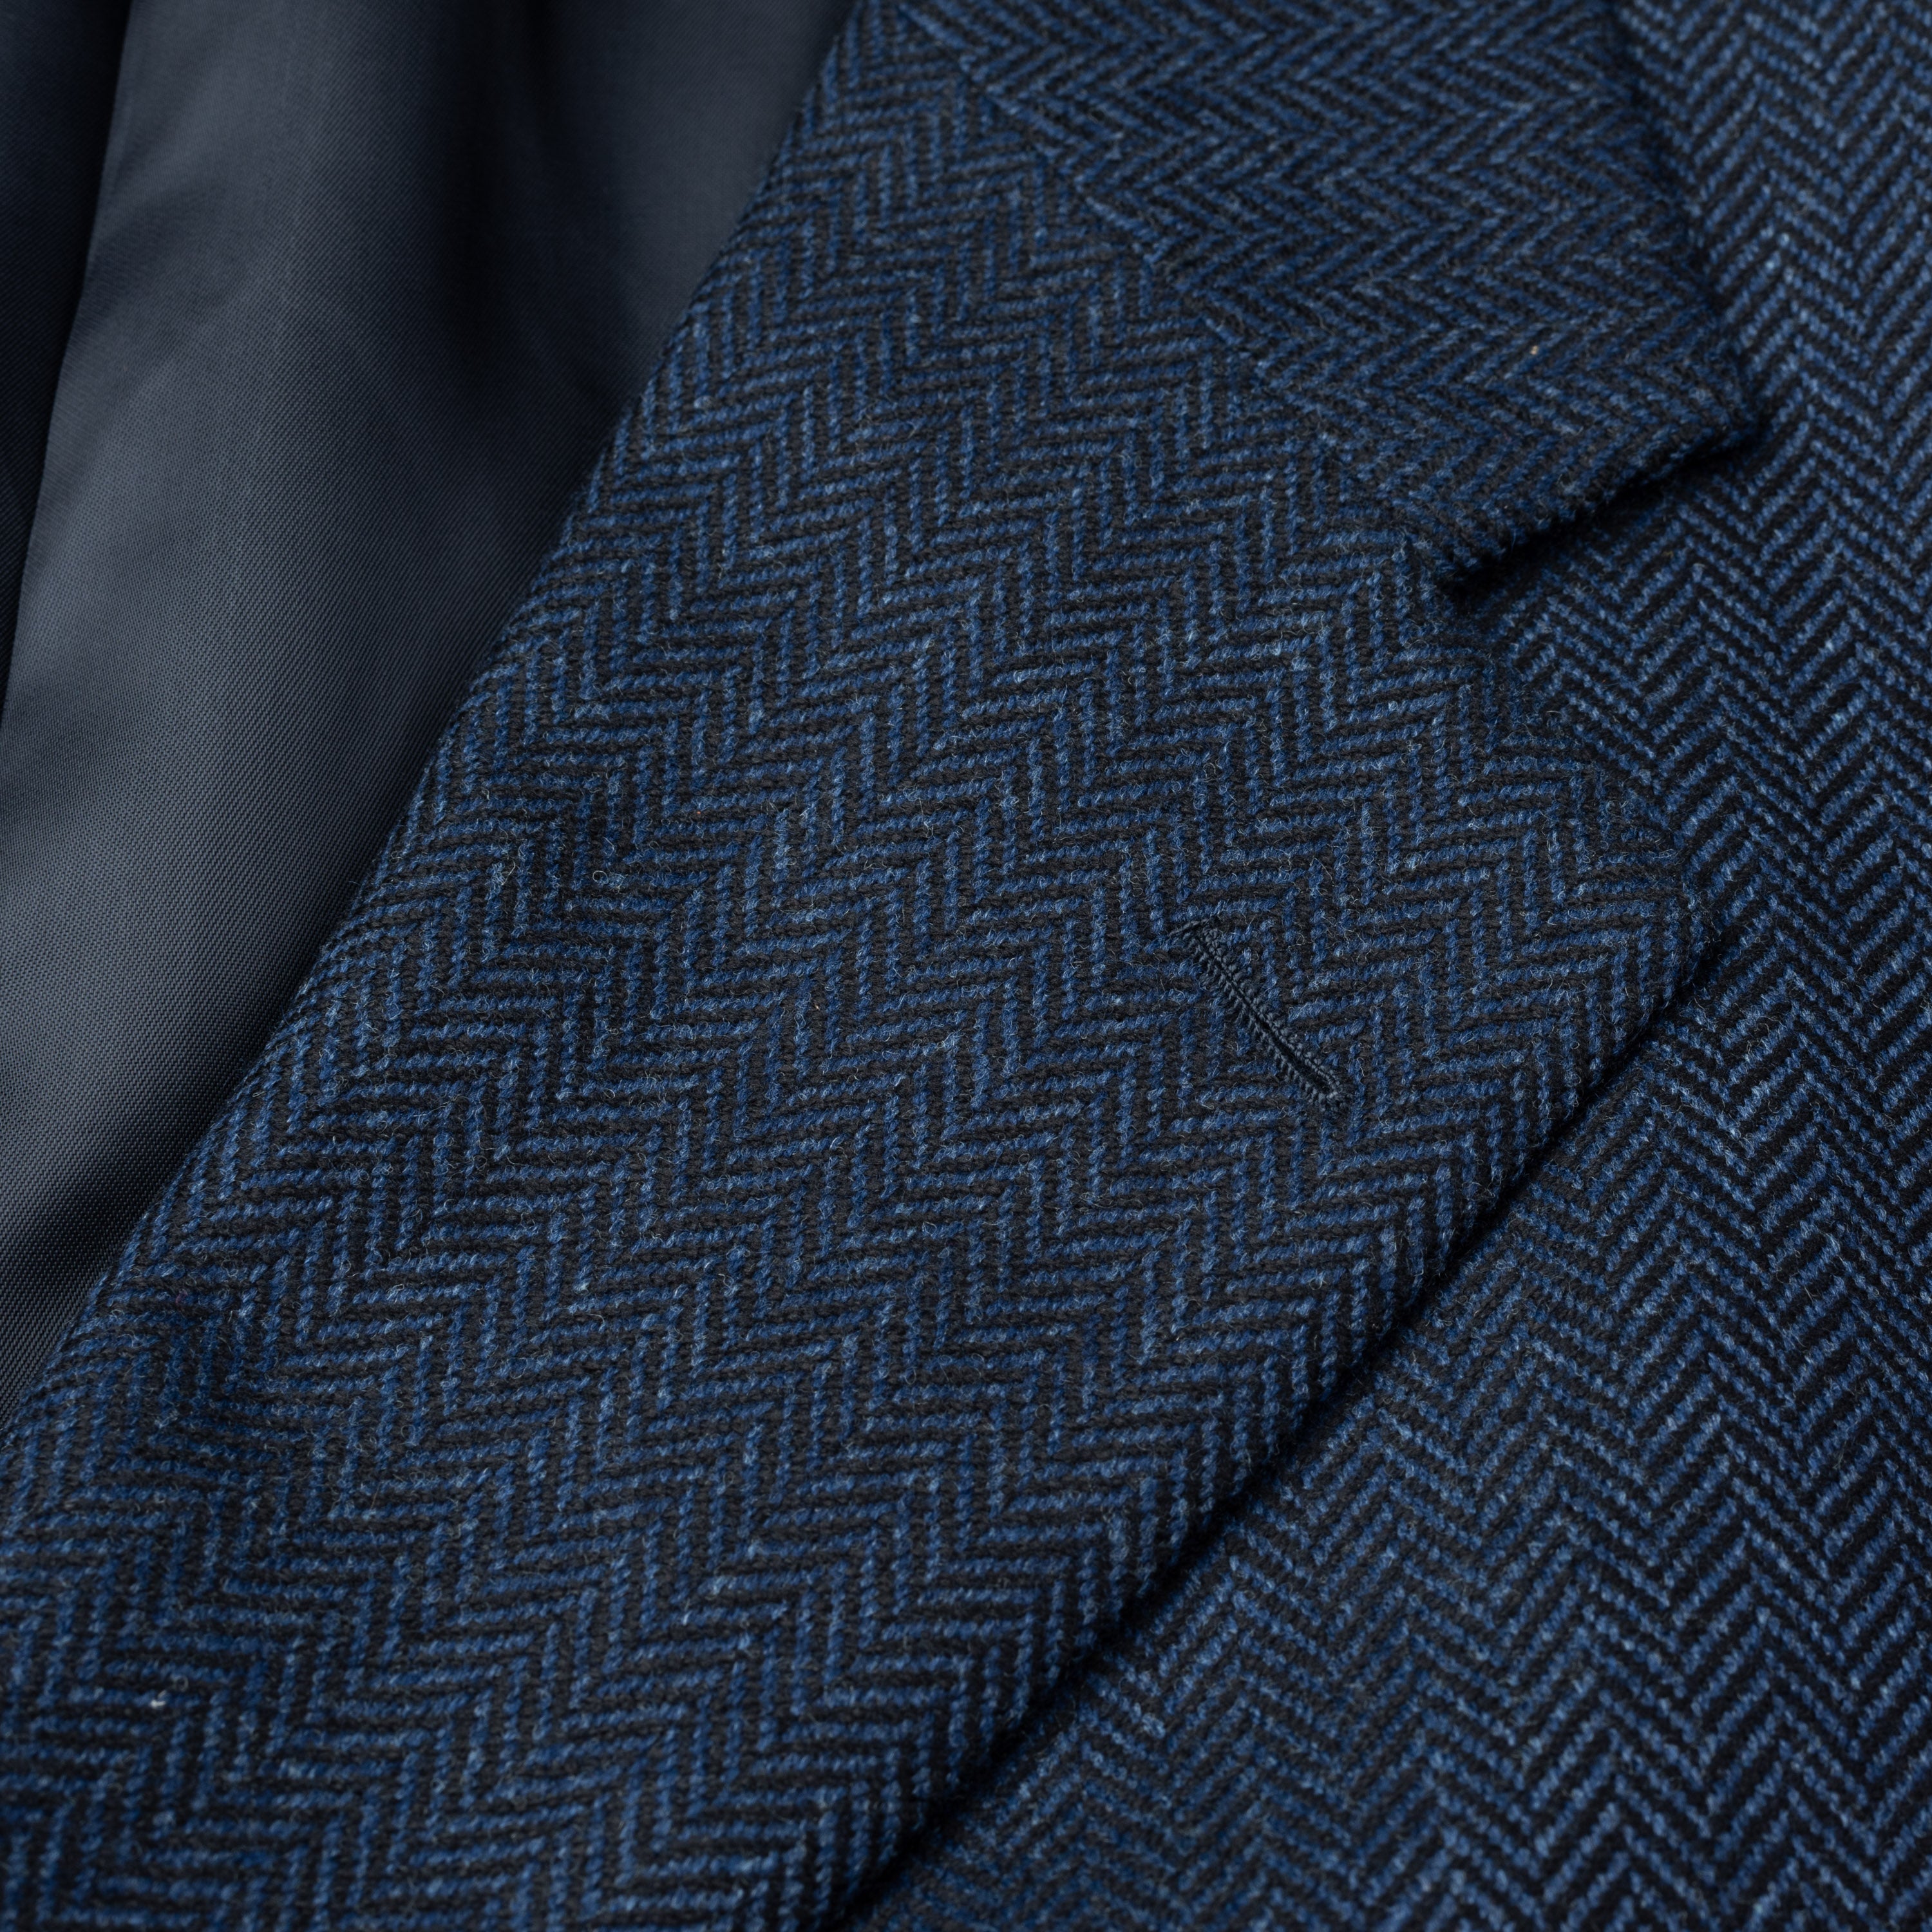 CASTANGIA 1850 Blue Wool-Cashmere Sport Coat Jacket EU 70 NEW US 60 Big and Tall CASTANGIA